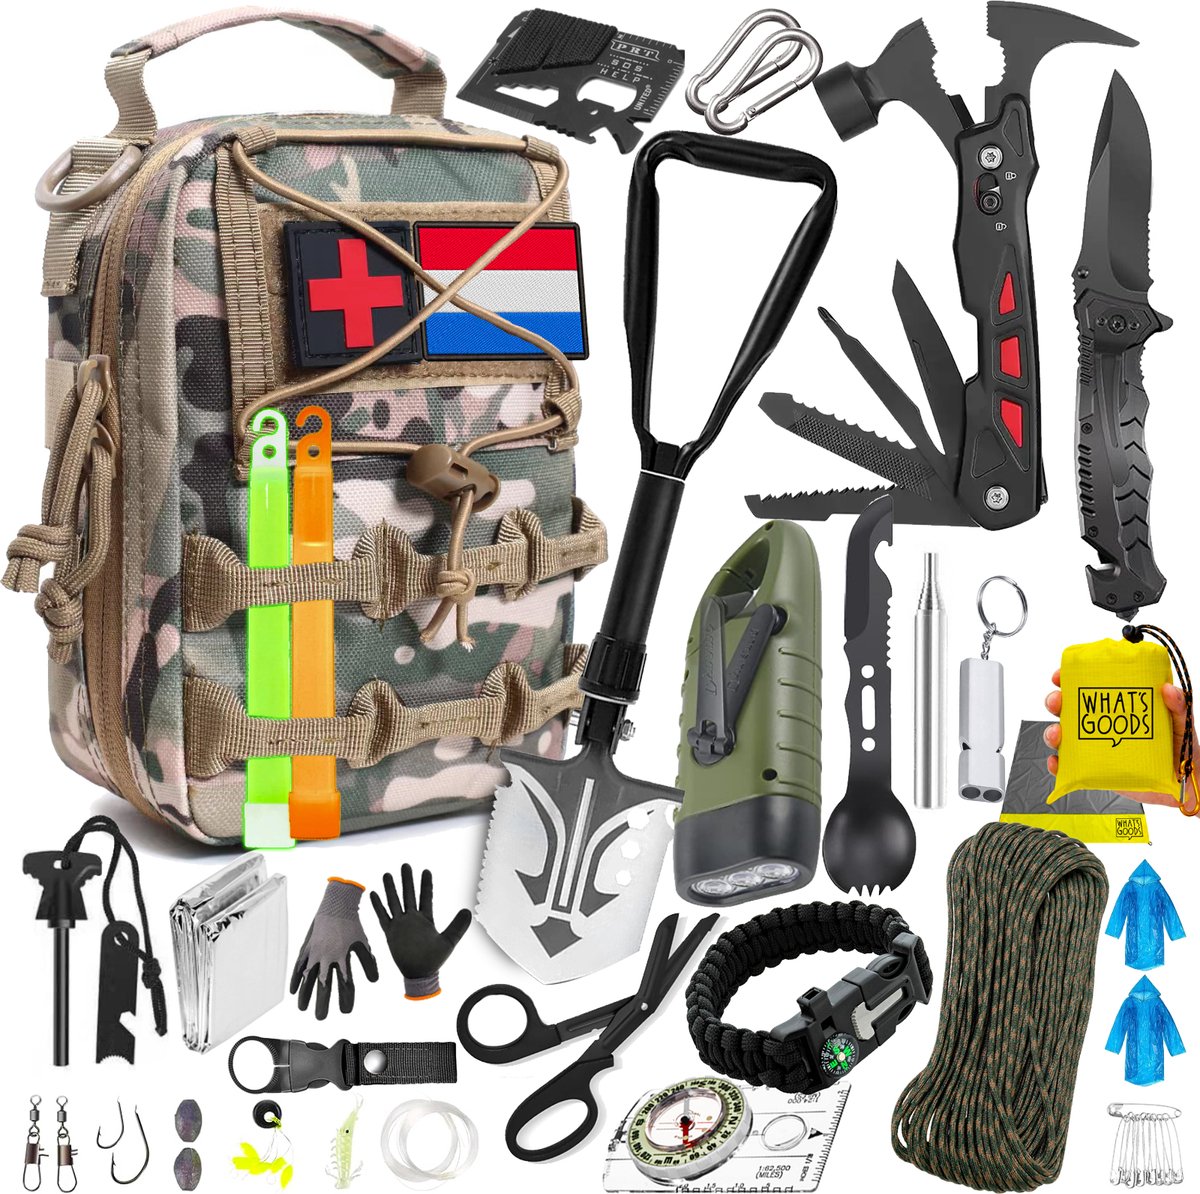 What's Goods® NL Survival Kit - Kwaliteit noodpakket incl. survival mes & schep, vuurstarter, dynamo zaklamp, nooddeken & meer - Multicam - What's Goods